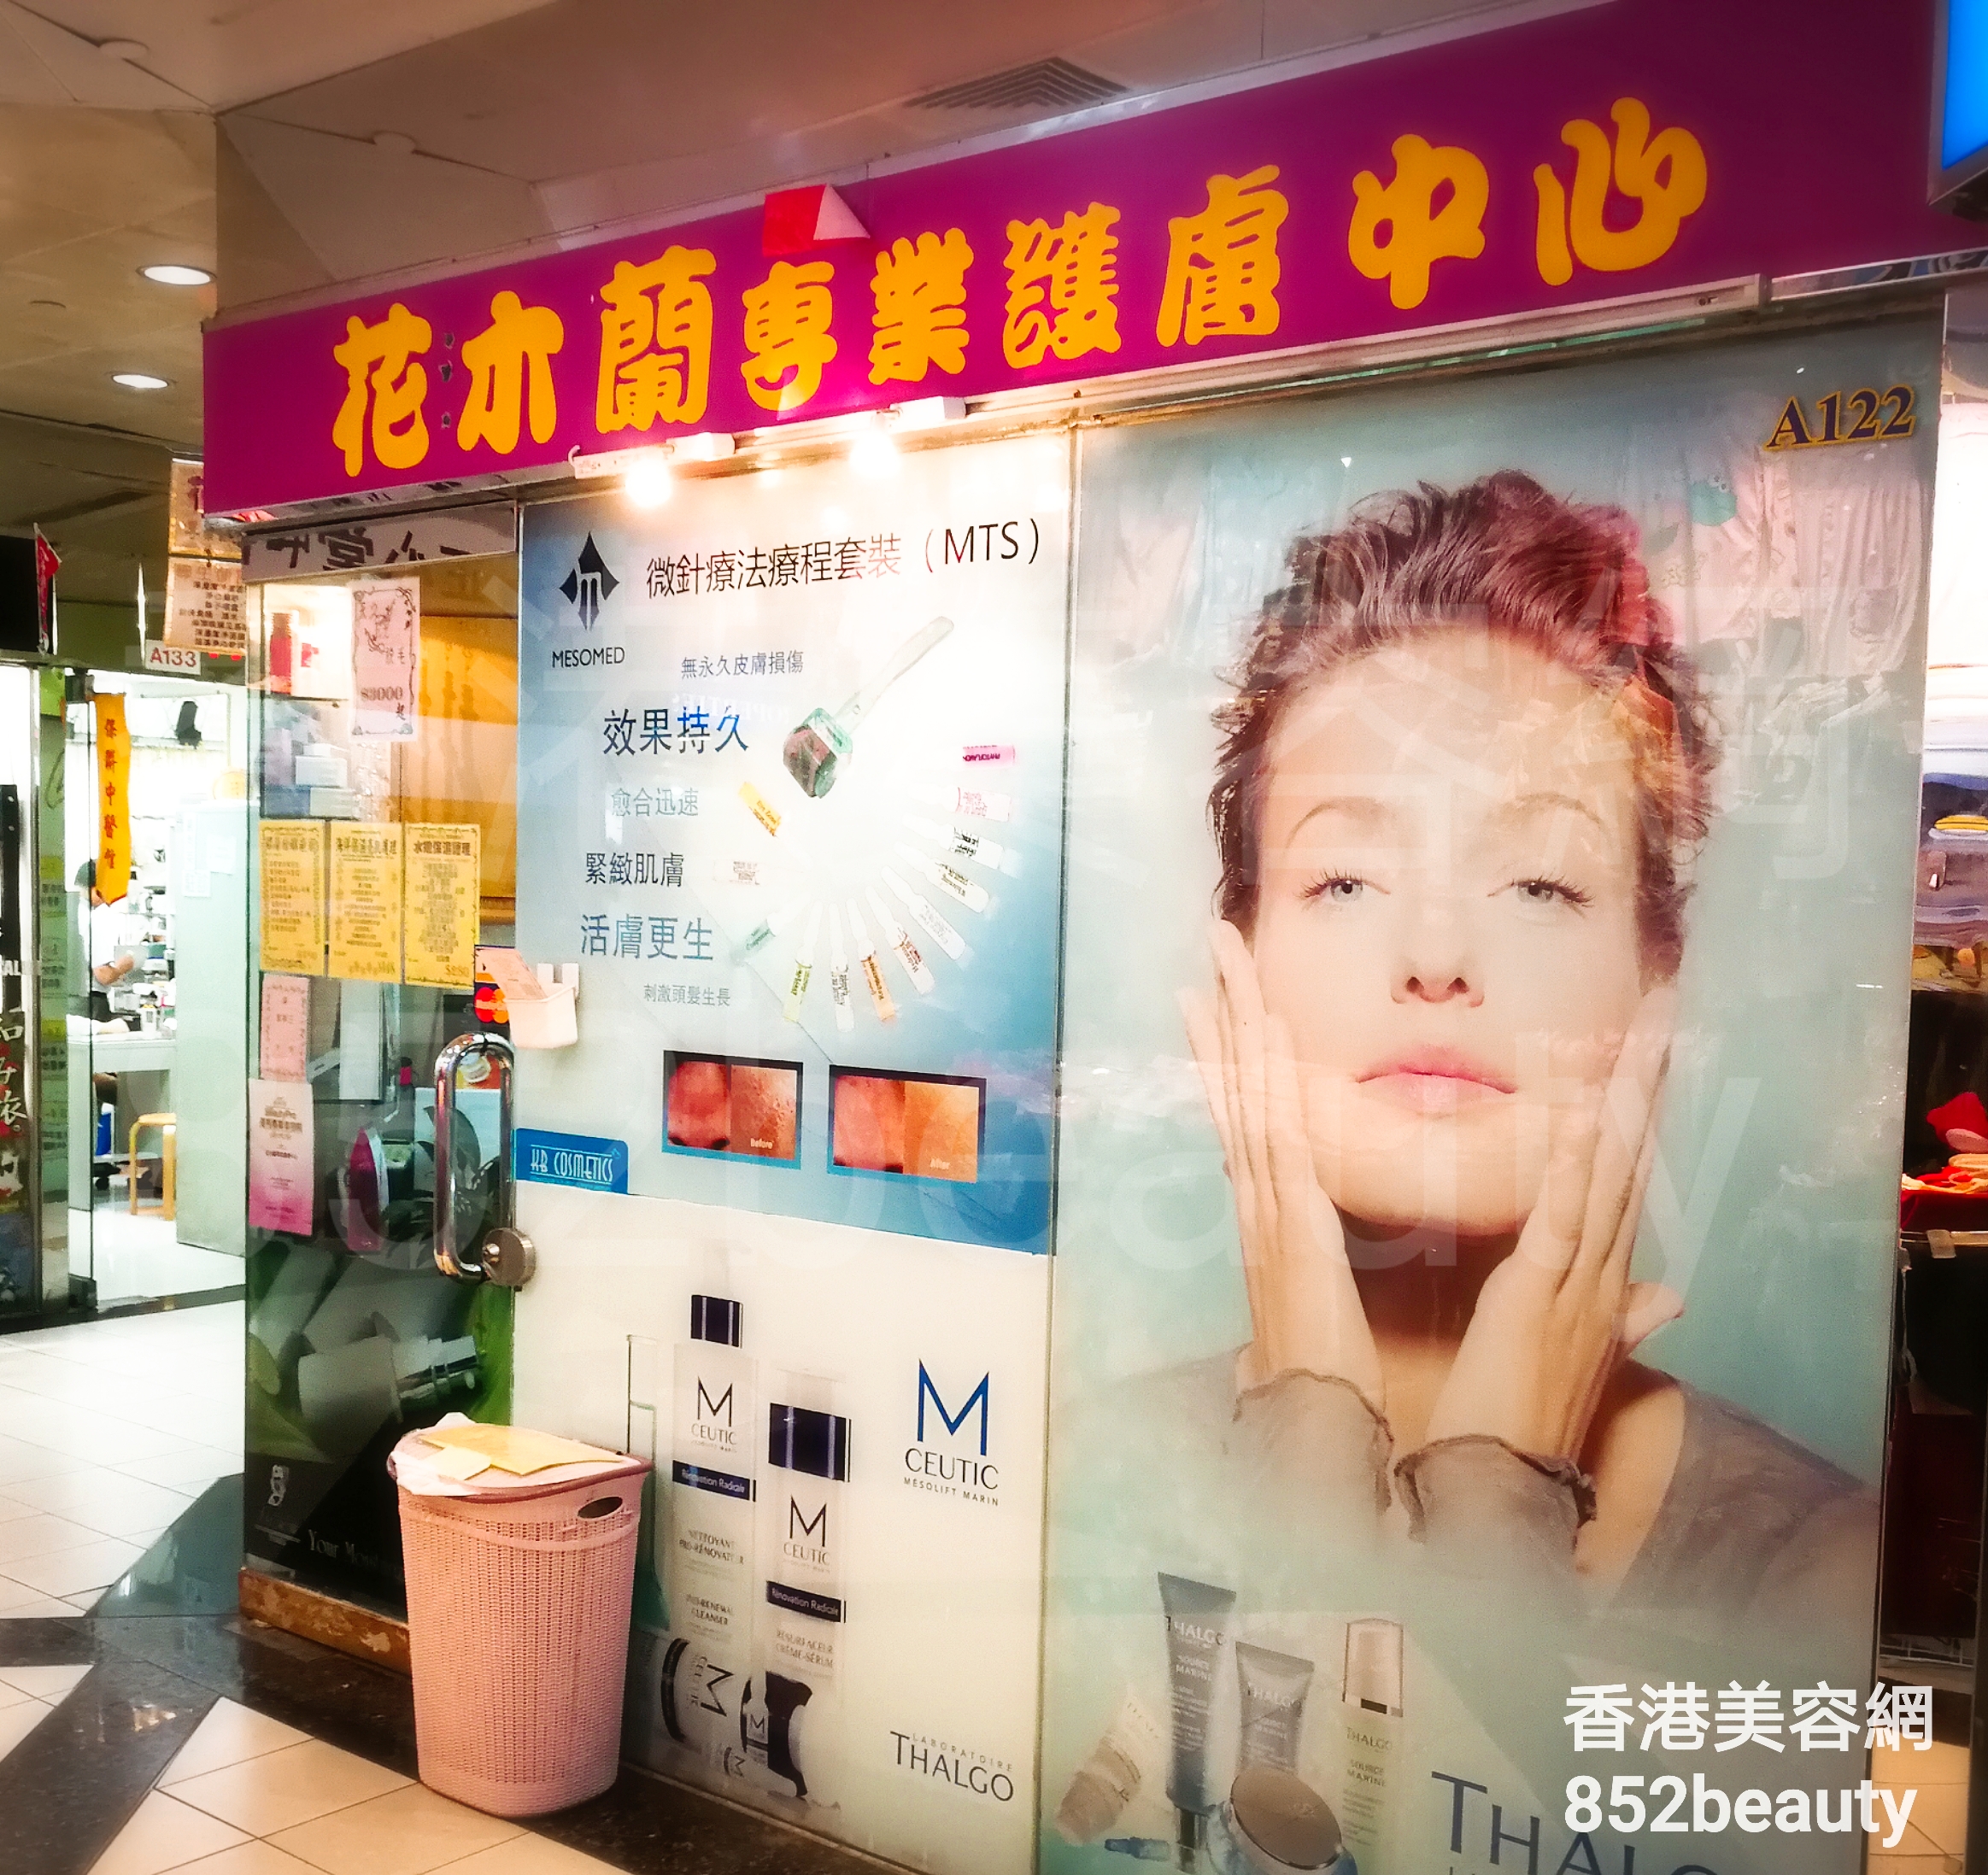 Facial Care: 花木蘭 專業護膚中心